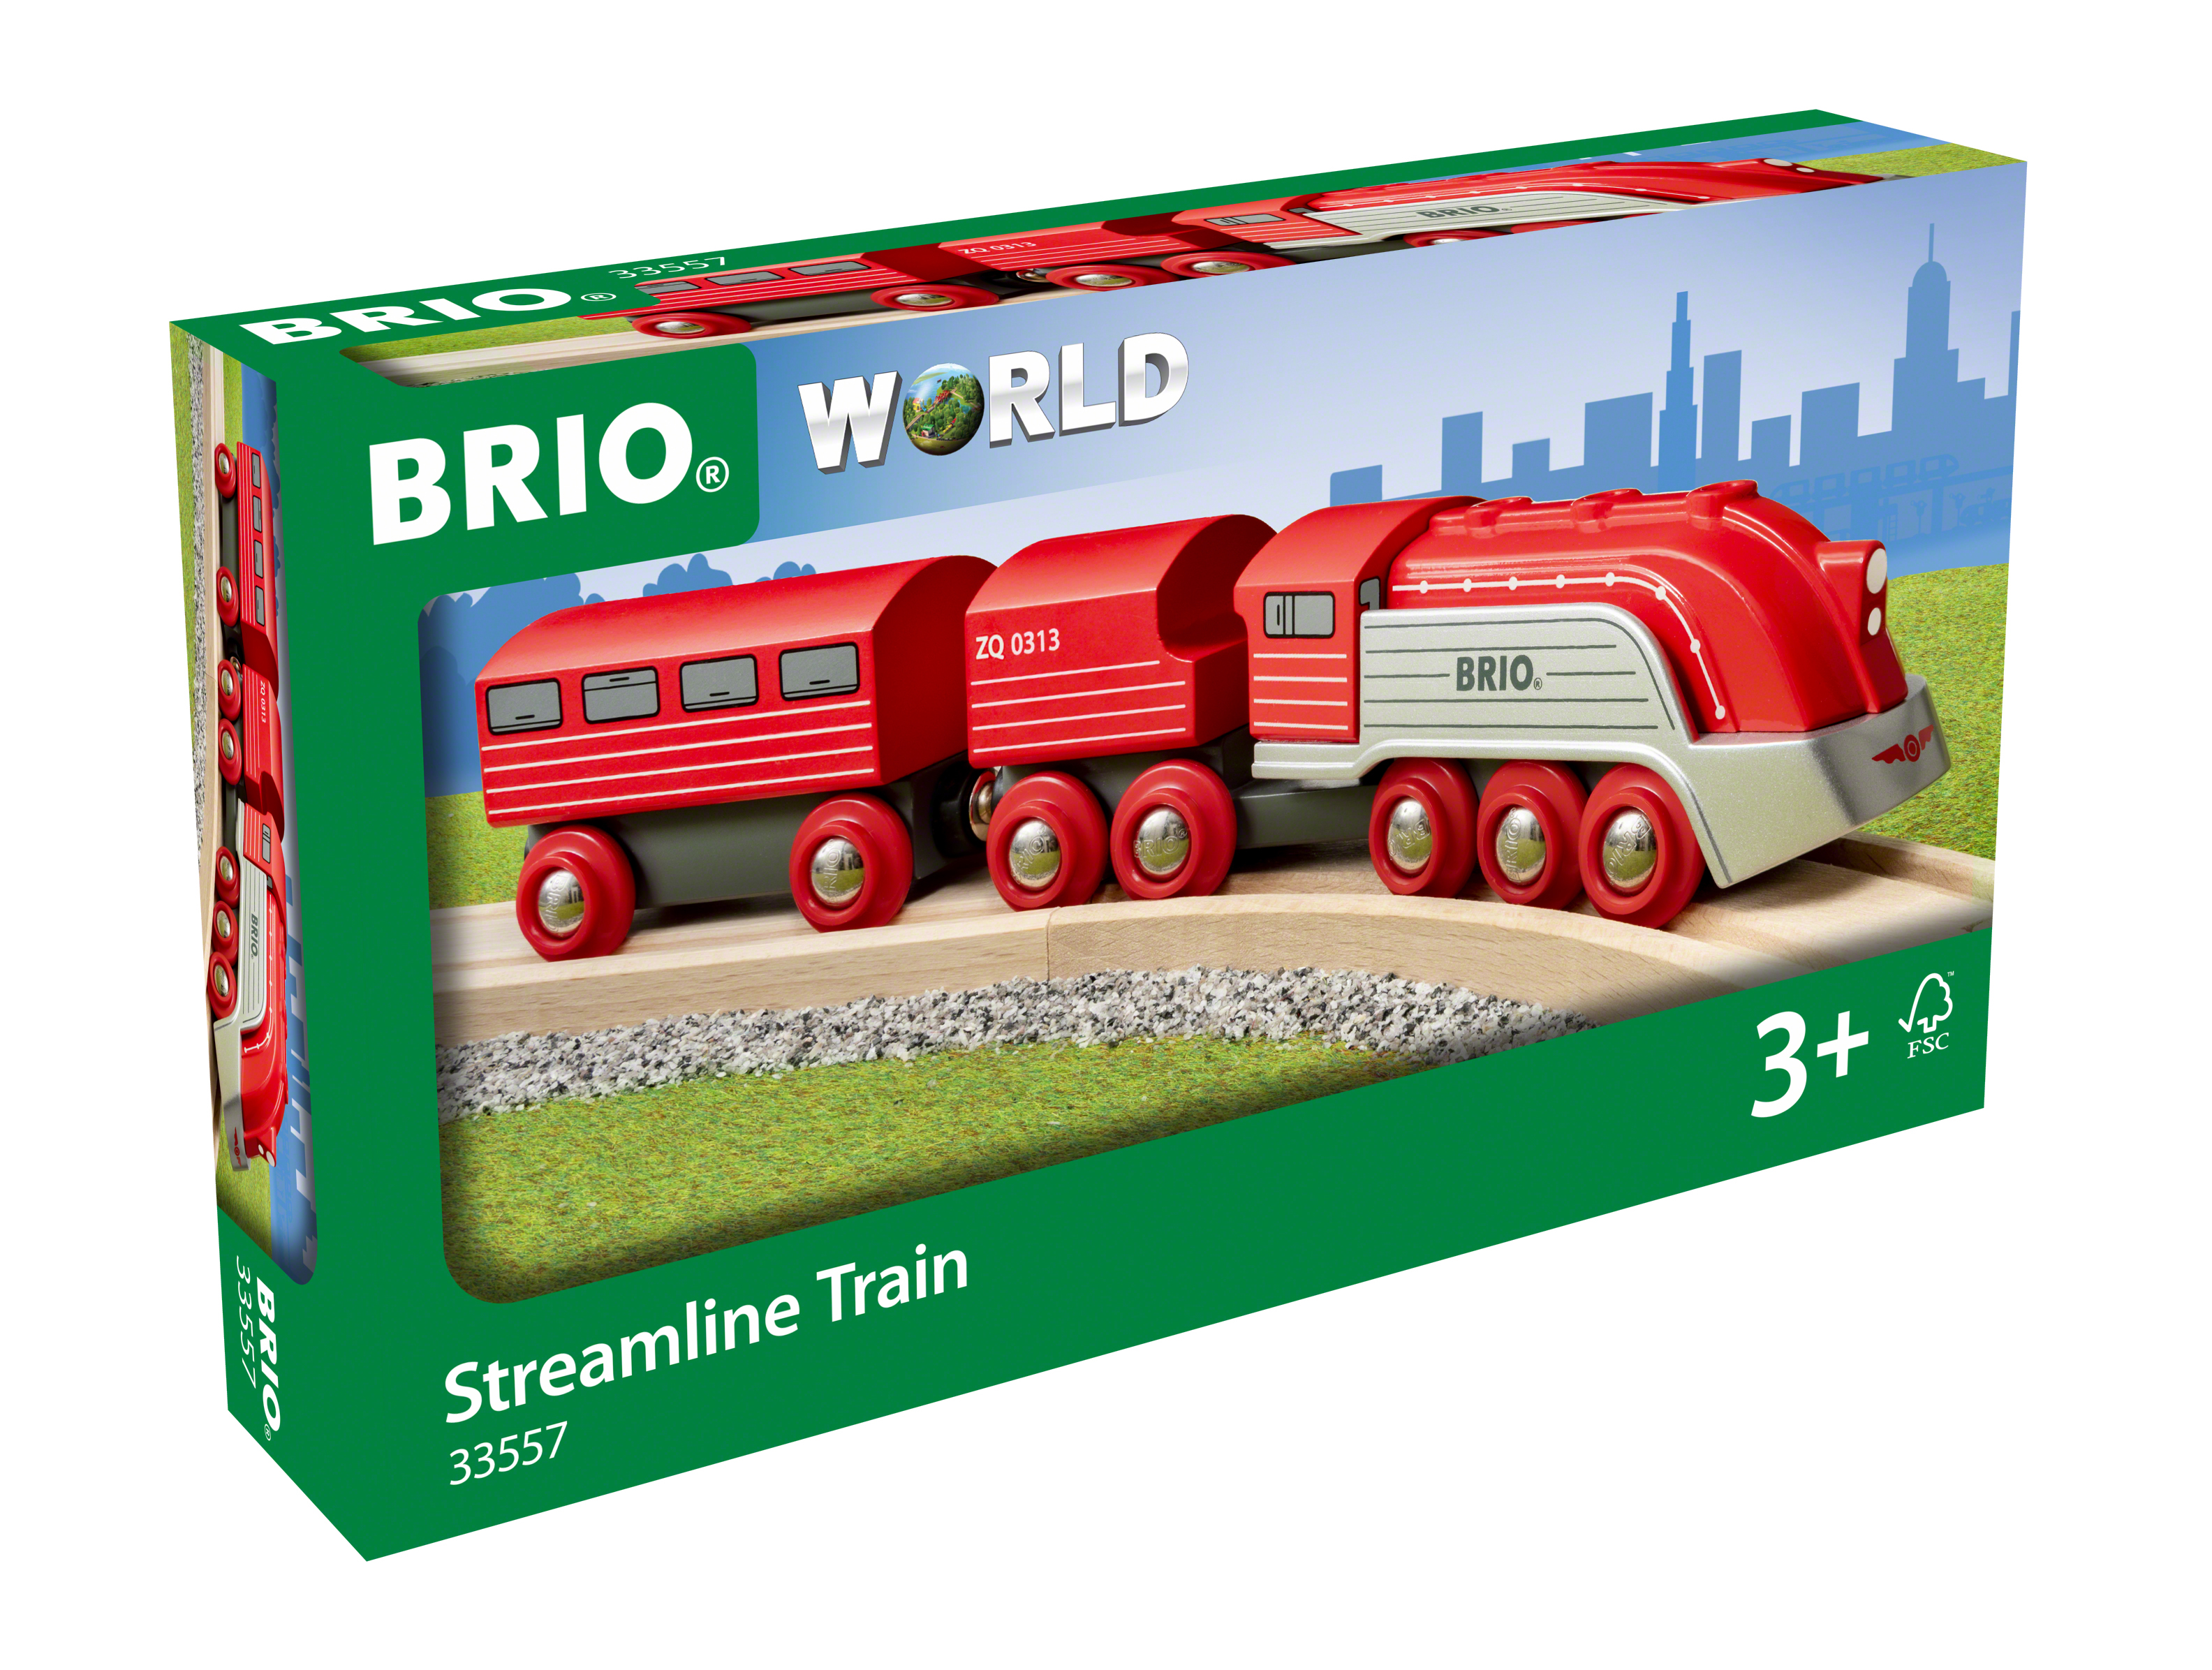 Streamline Train, Brio